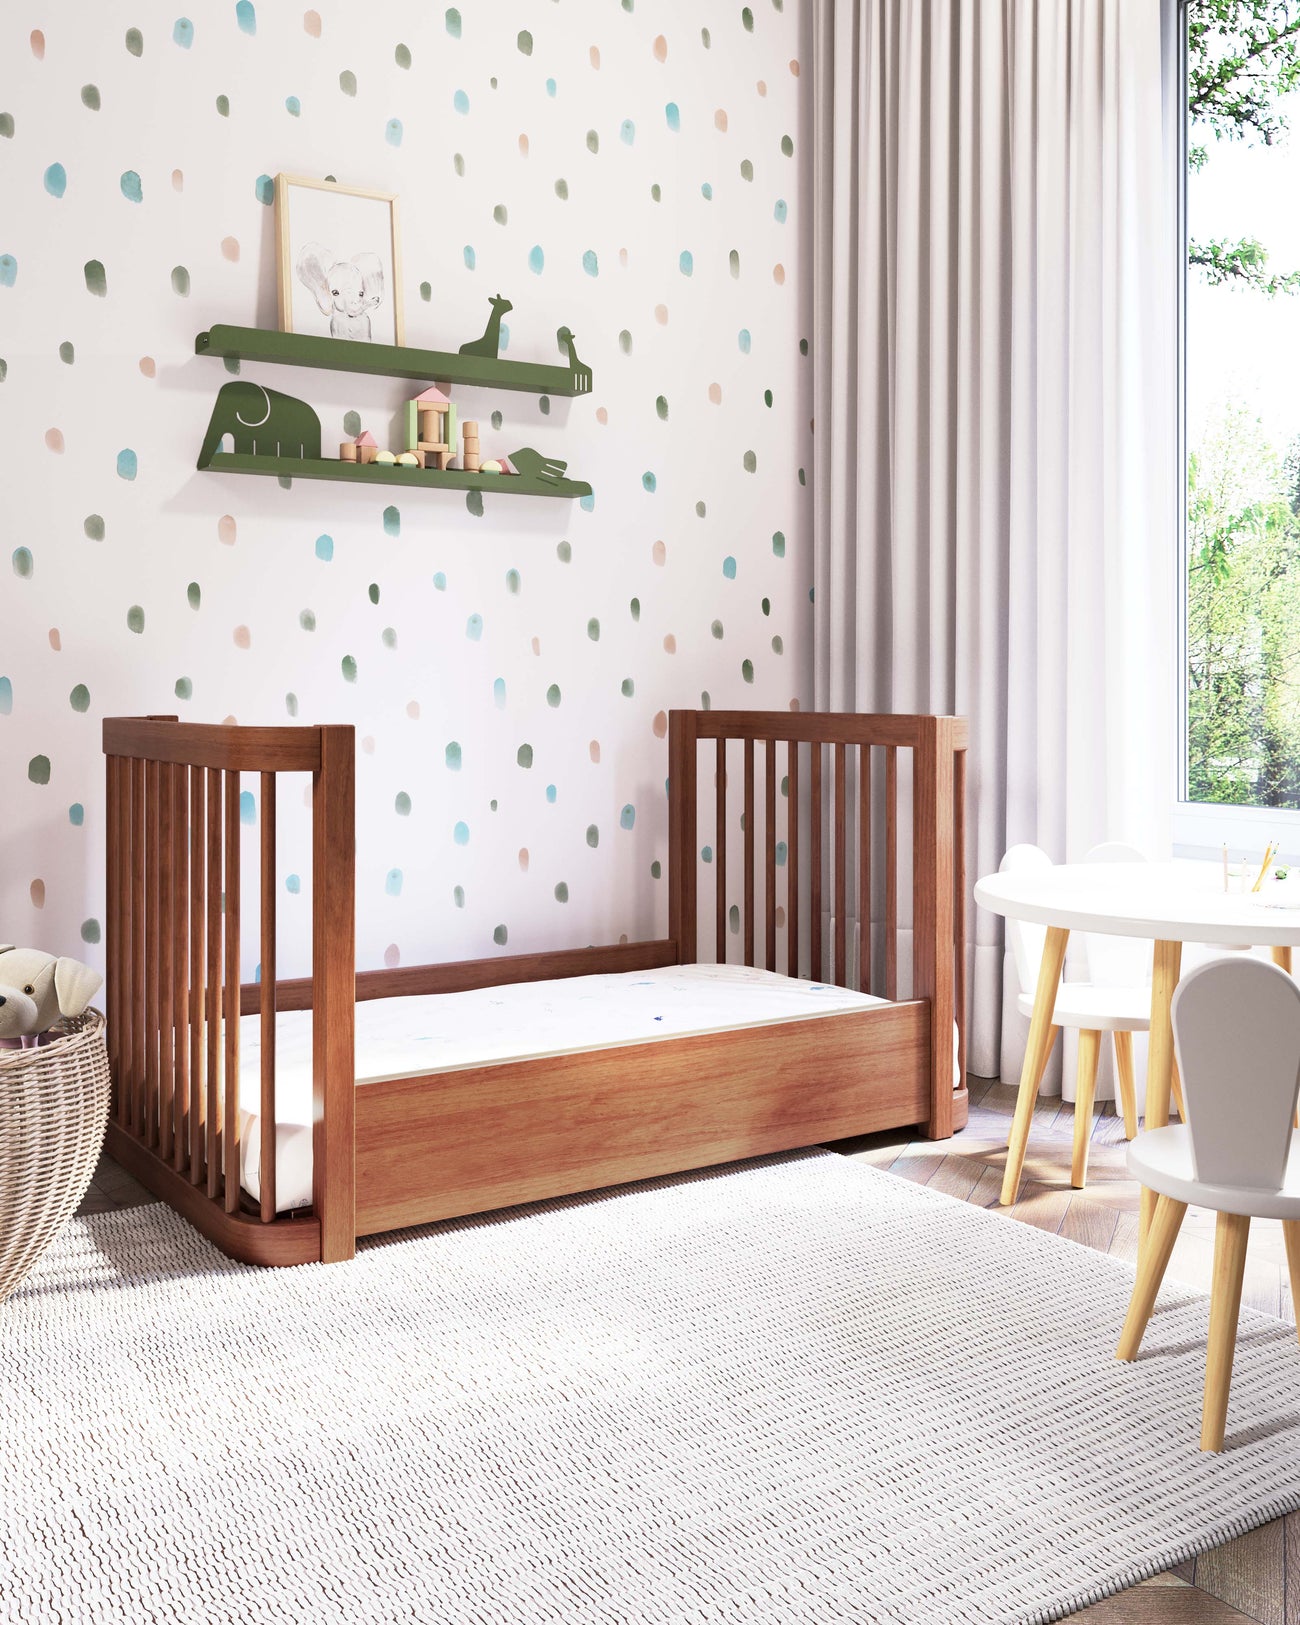 European Design Modern Baby Cribs